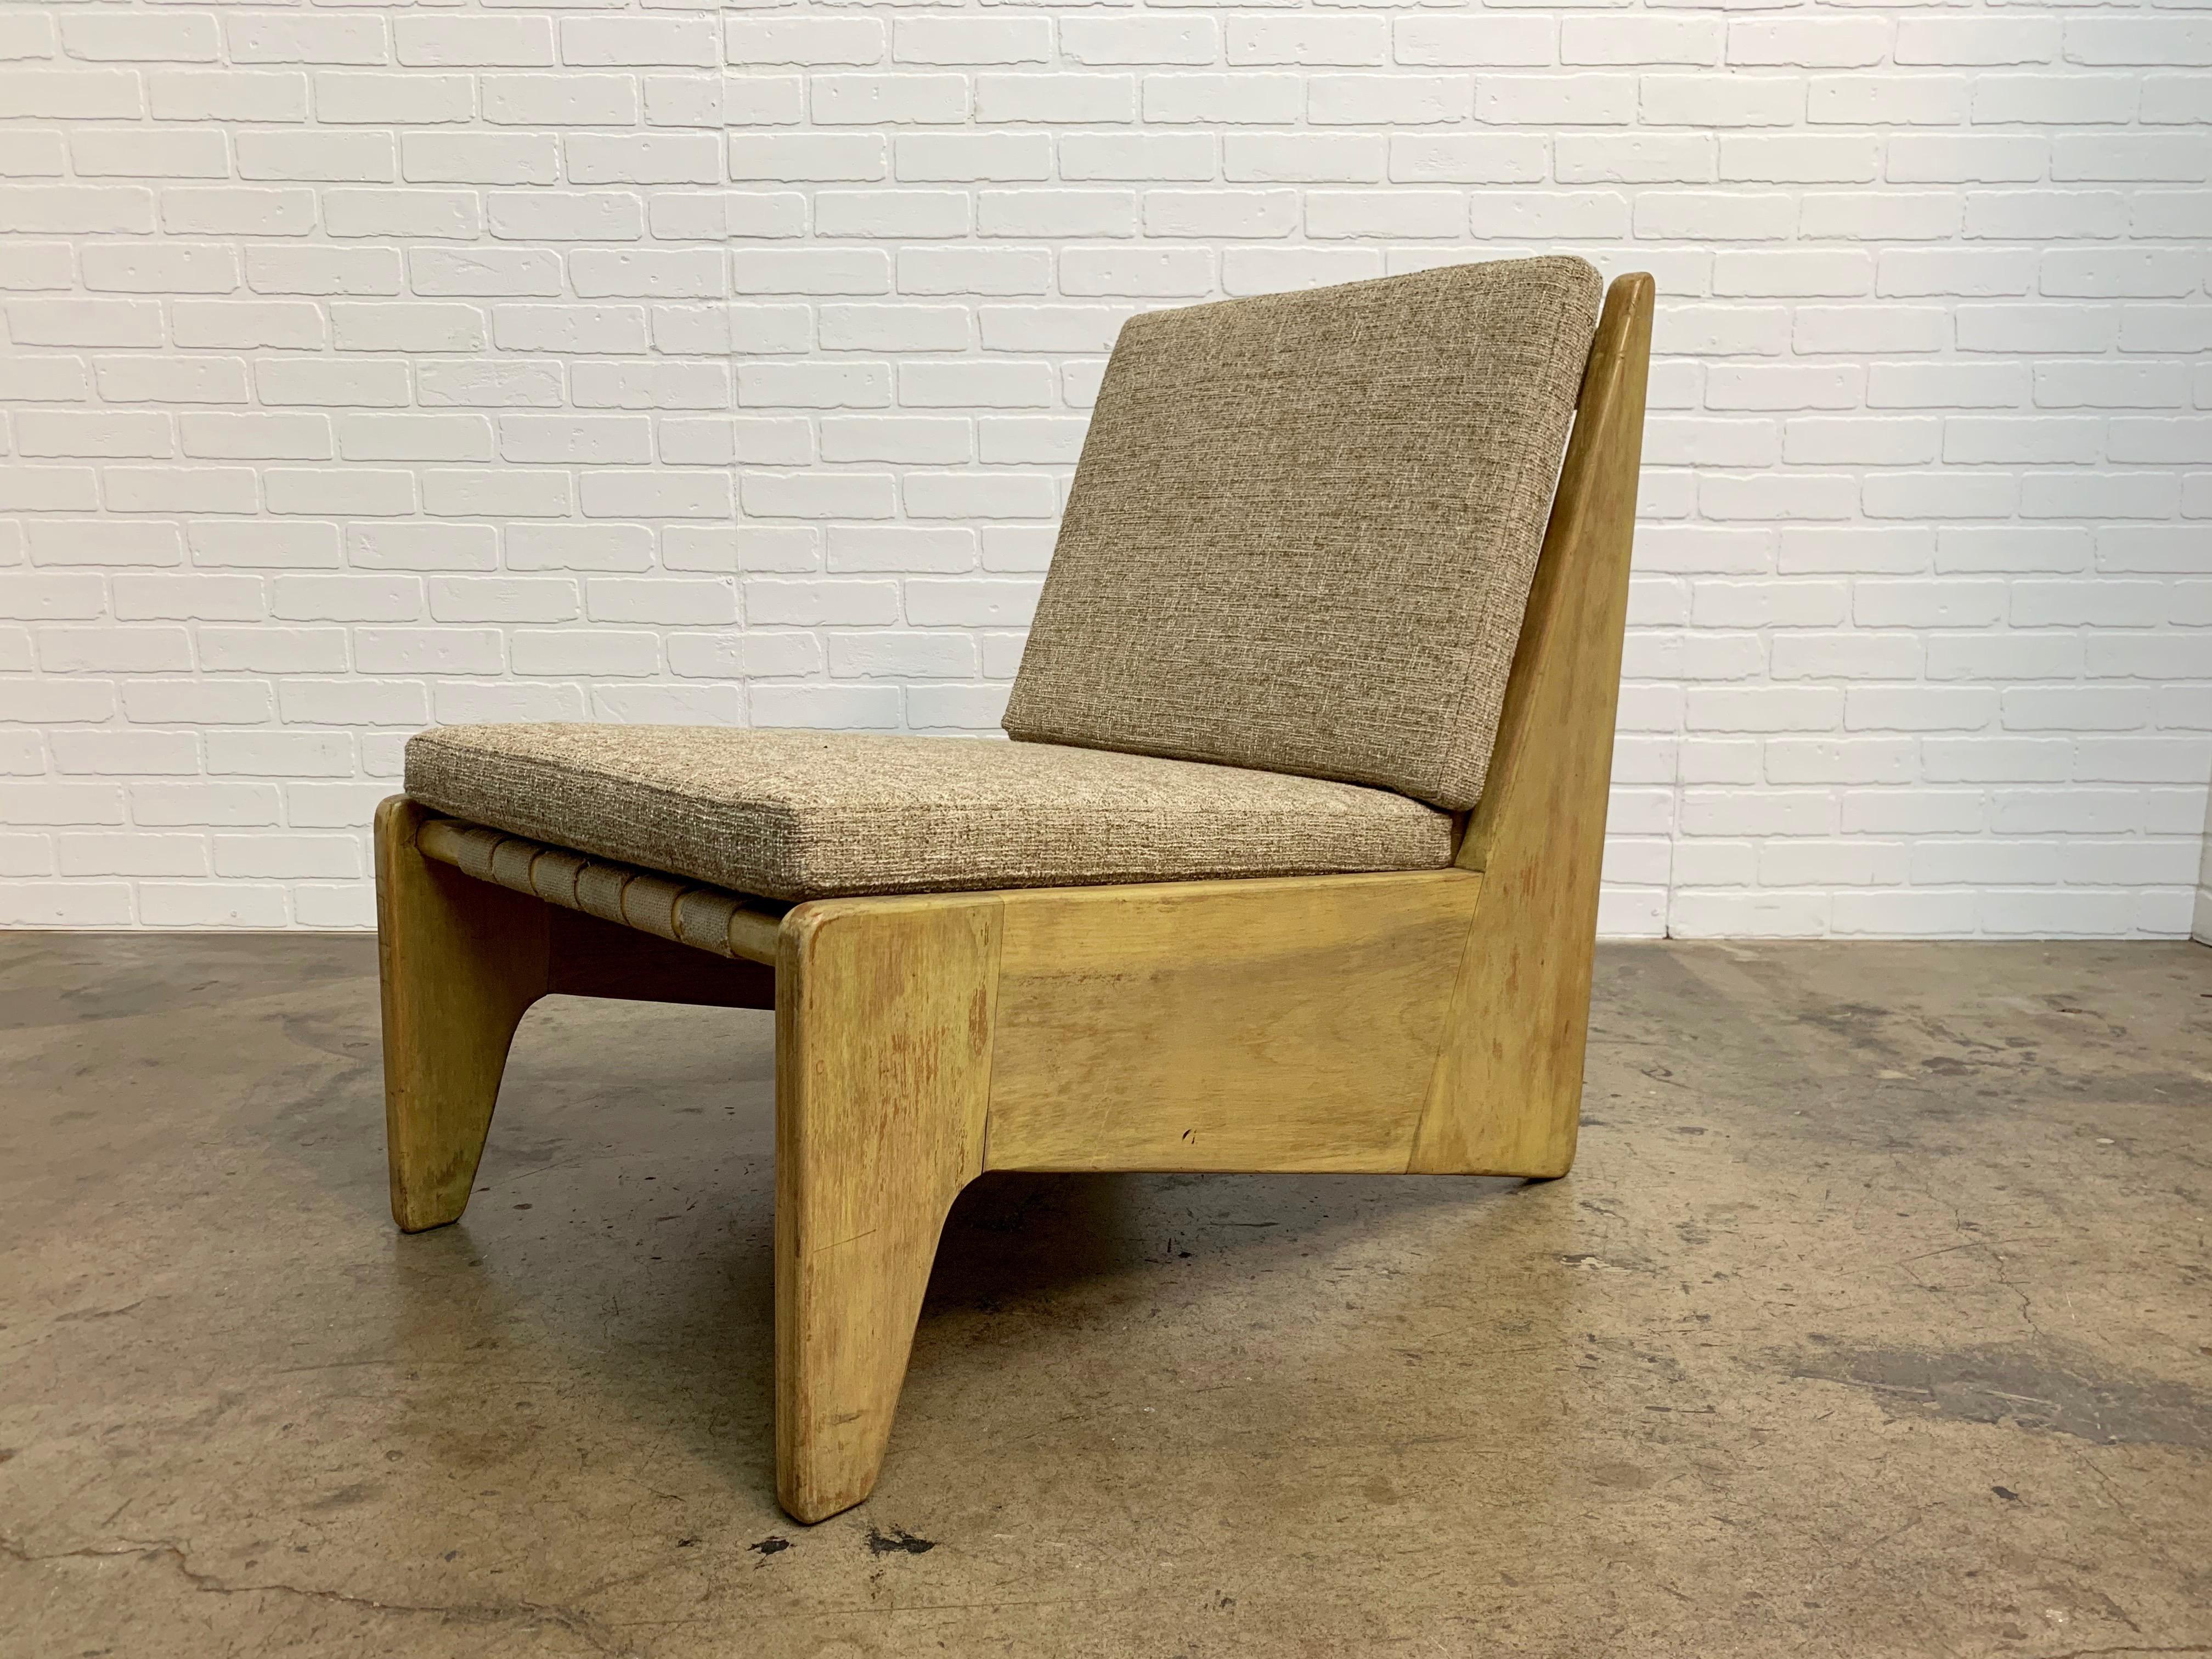 20th Century Architectural Modernist Slipper Chair